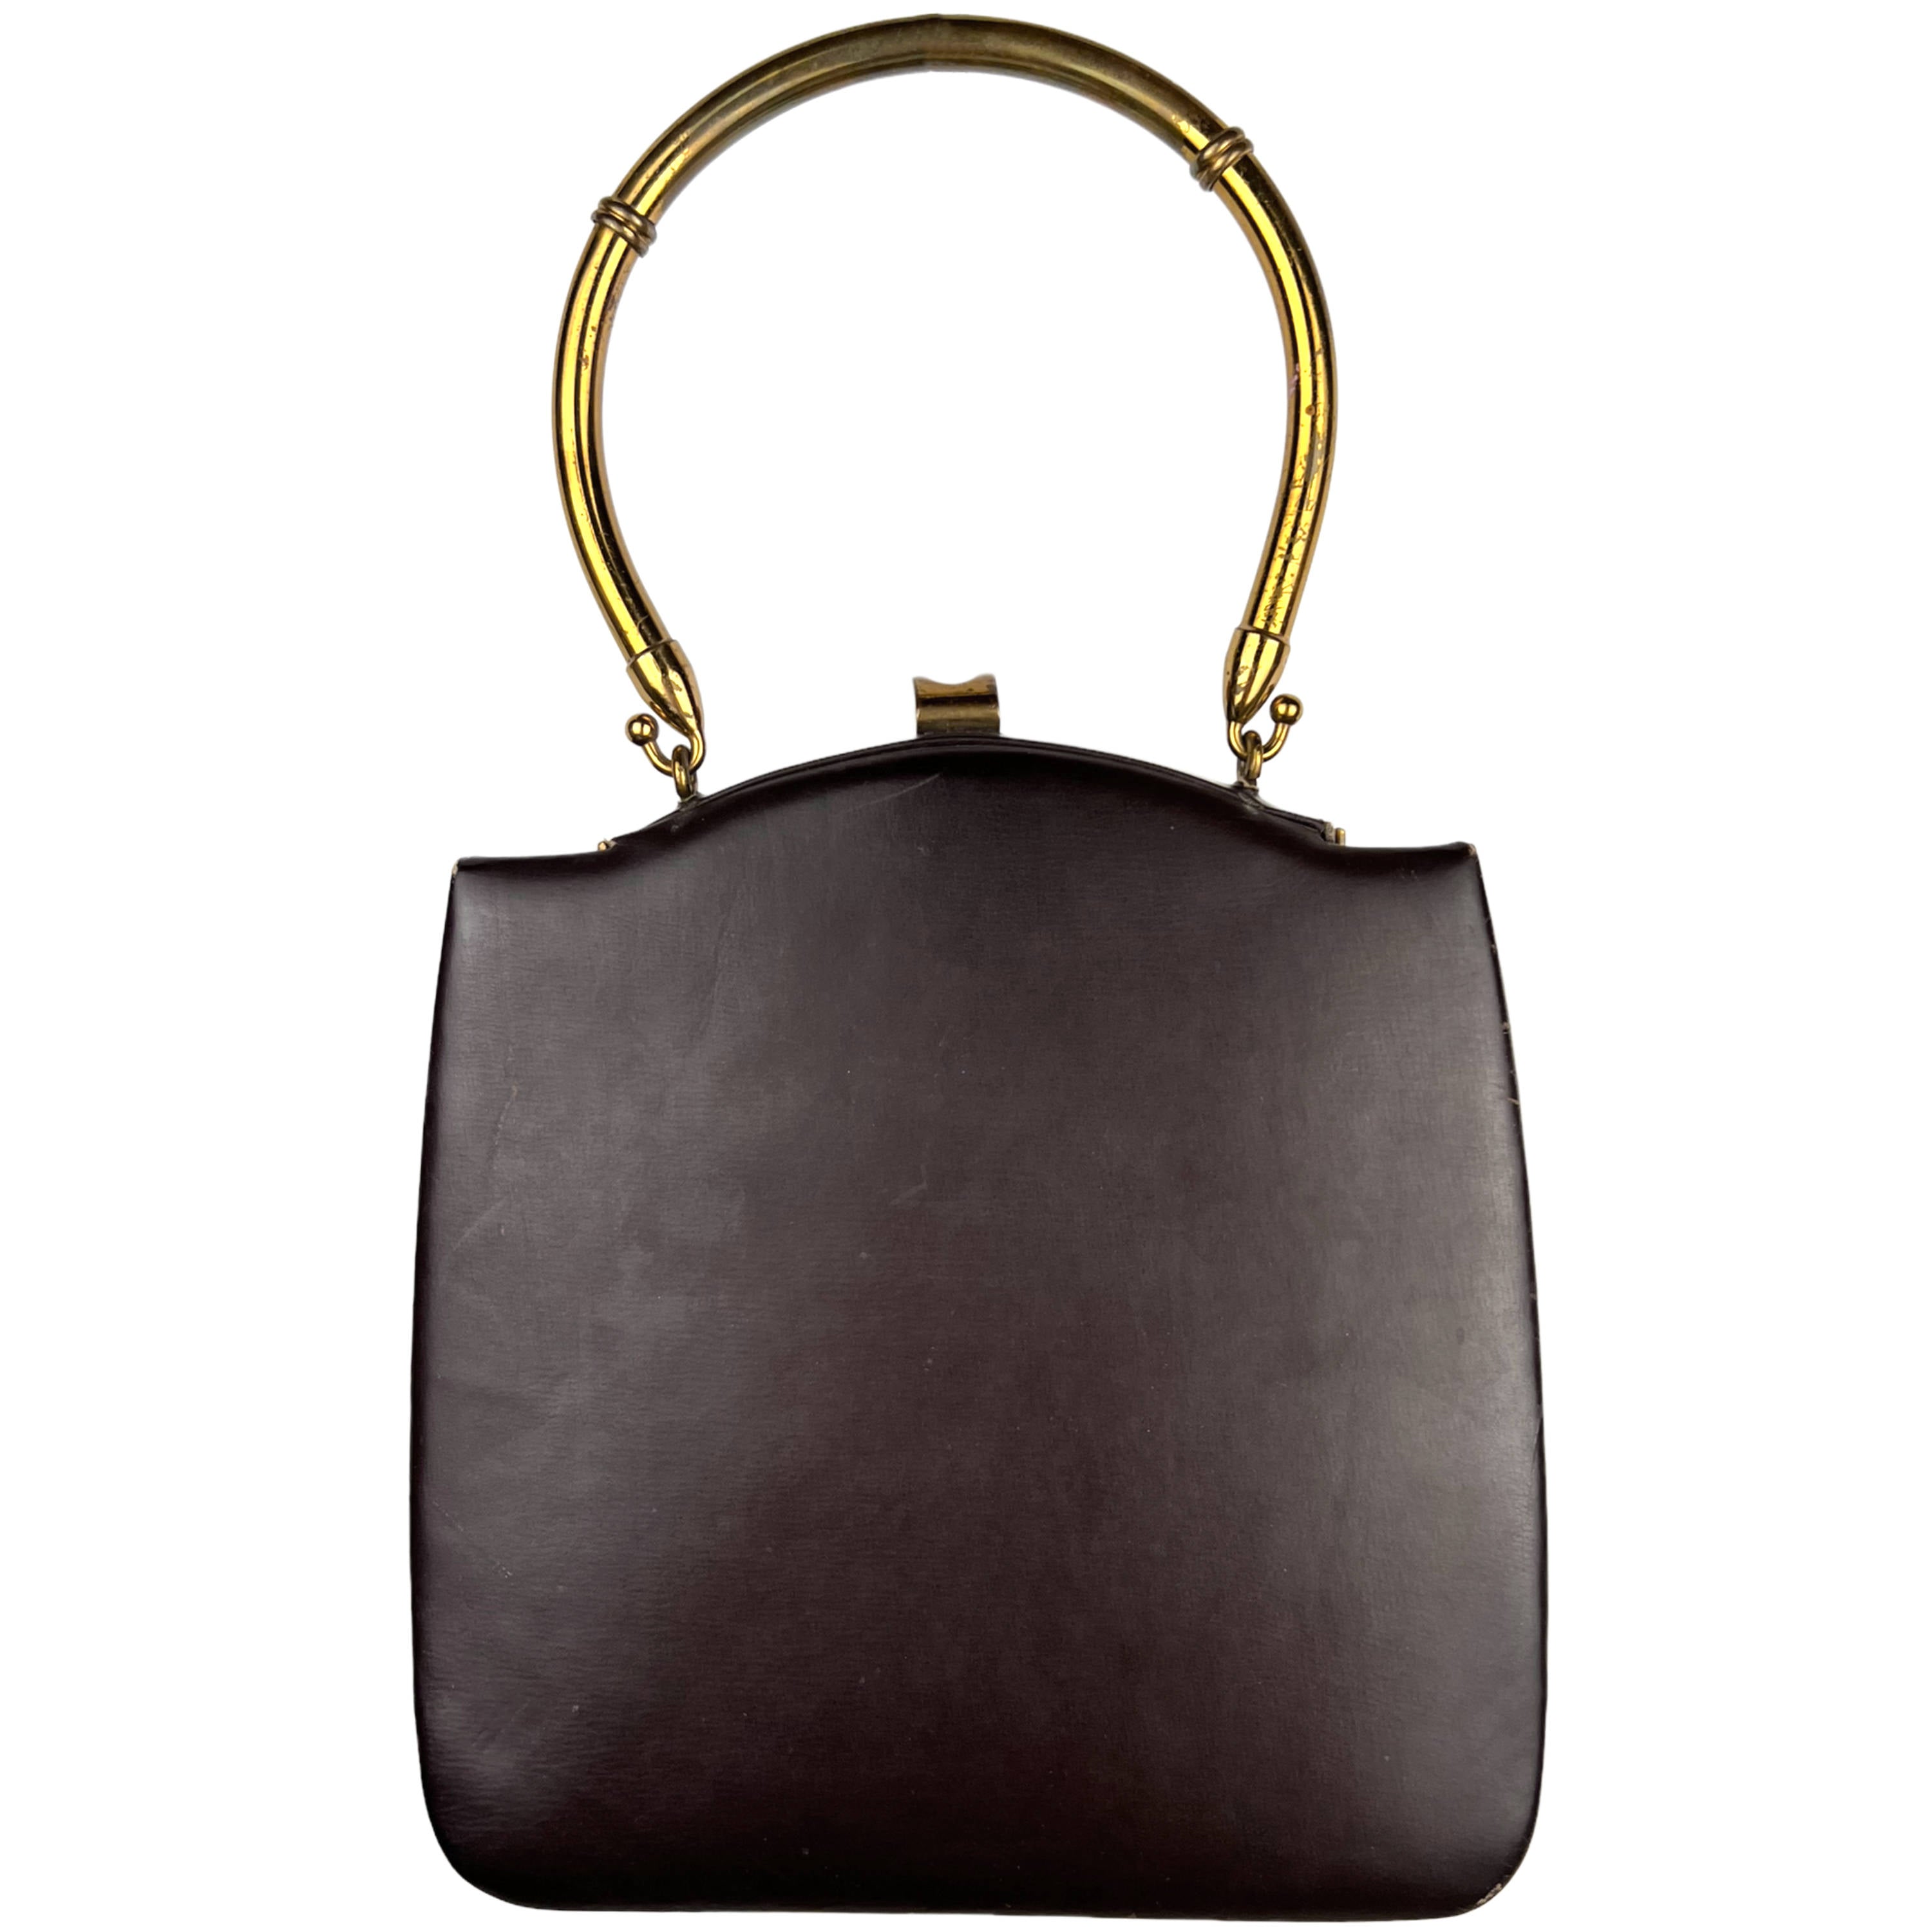 Retro Messenger Vintage Bag With Hooves Buckle Versatile Womens Beige  Handbag In A Box From Beautyhandbag, $64.37 | DHgate.Com